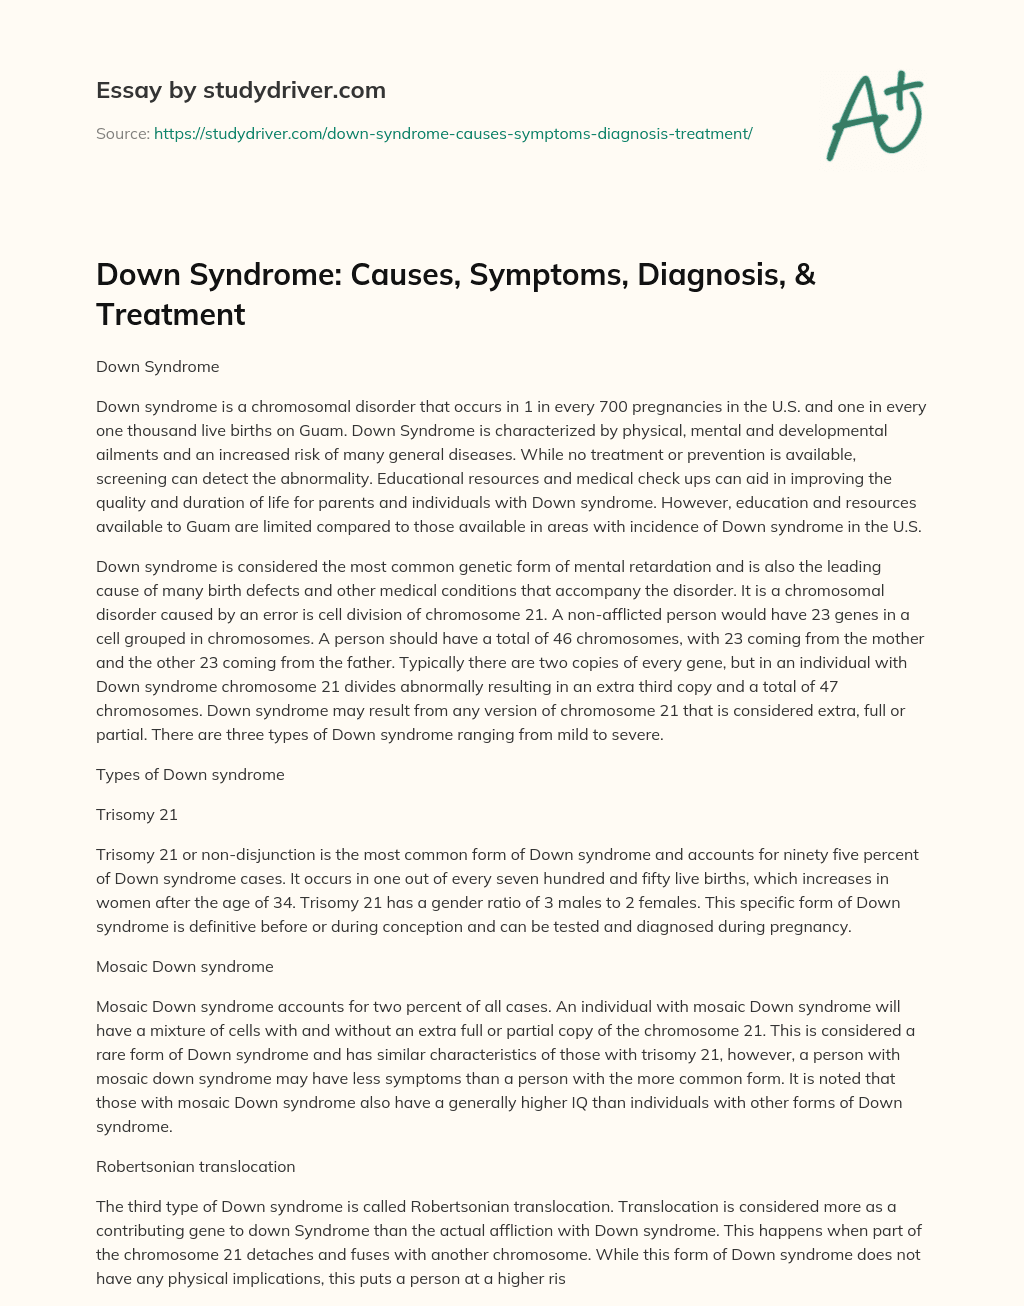 Down Syndrome: Causes, Symptoms, Diagnosis, & Treatment essay